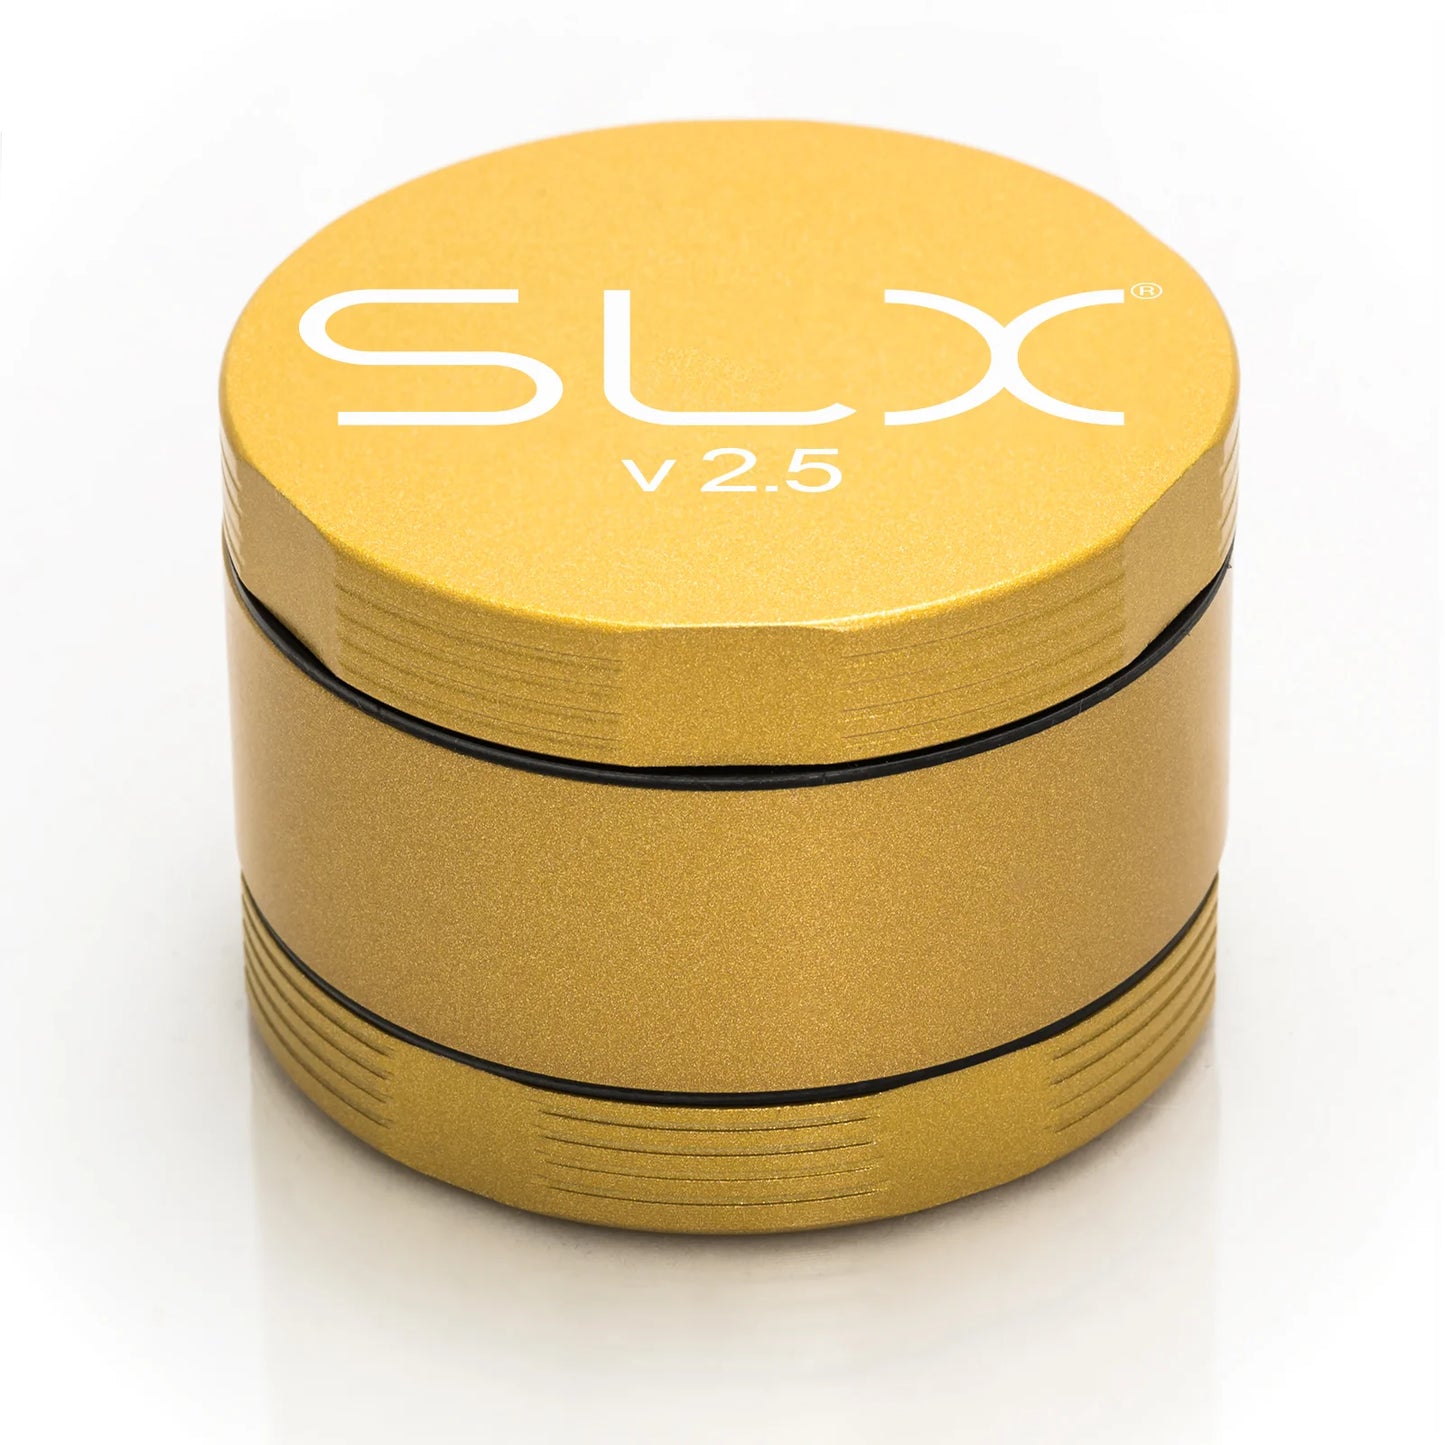 SLX v2.5 2.0" Ceramic Coat Grinder - Yellow Gold